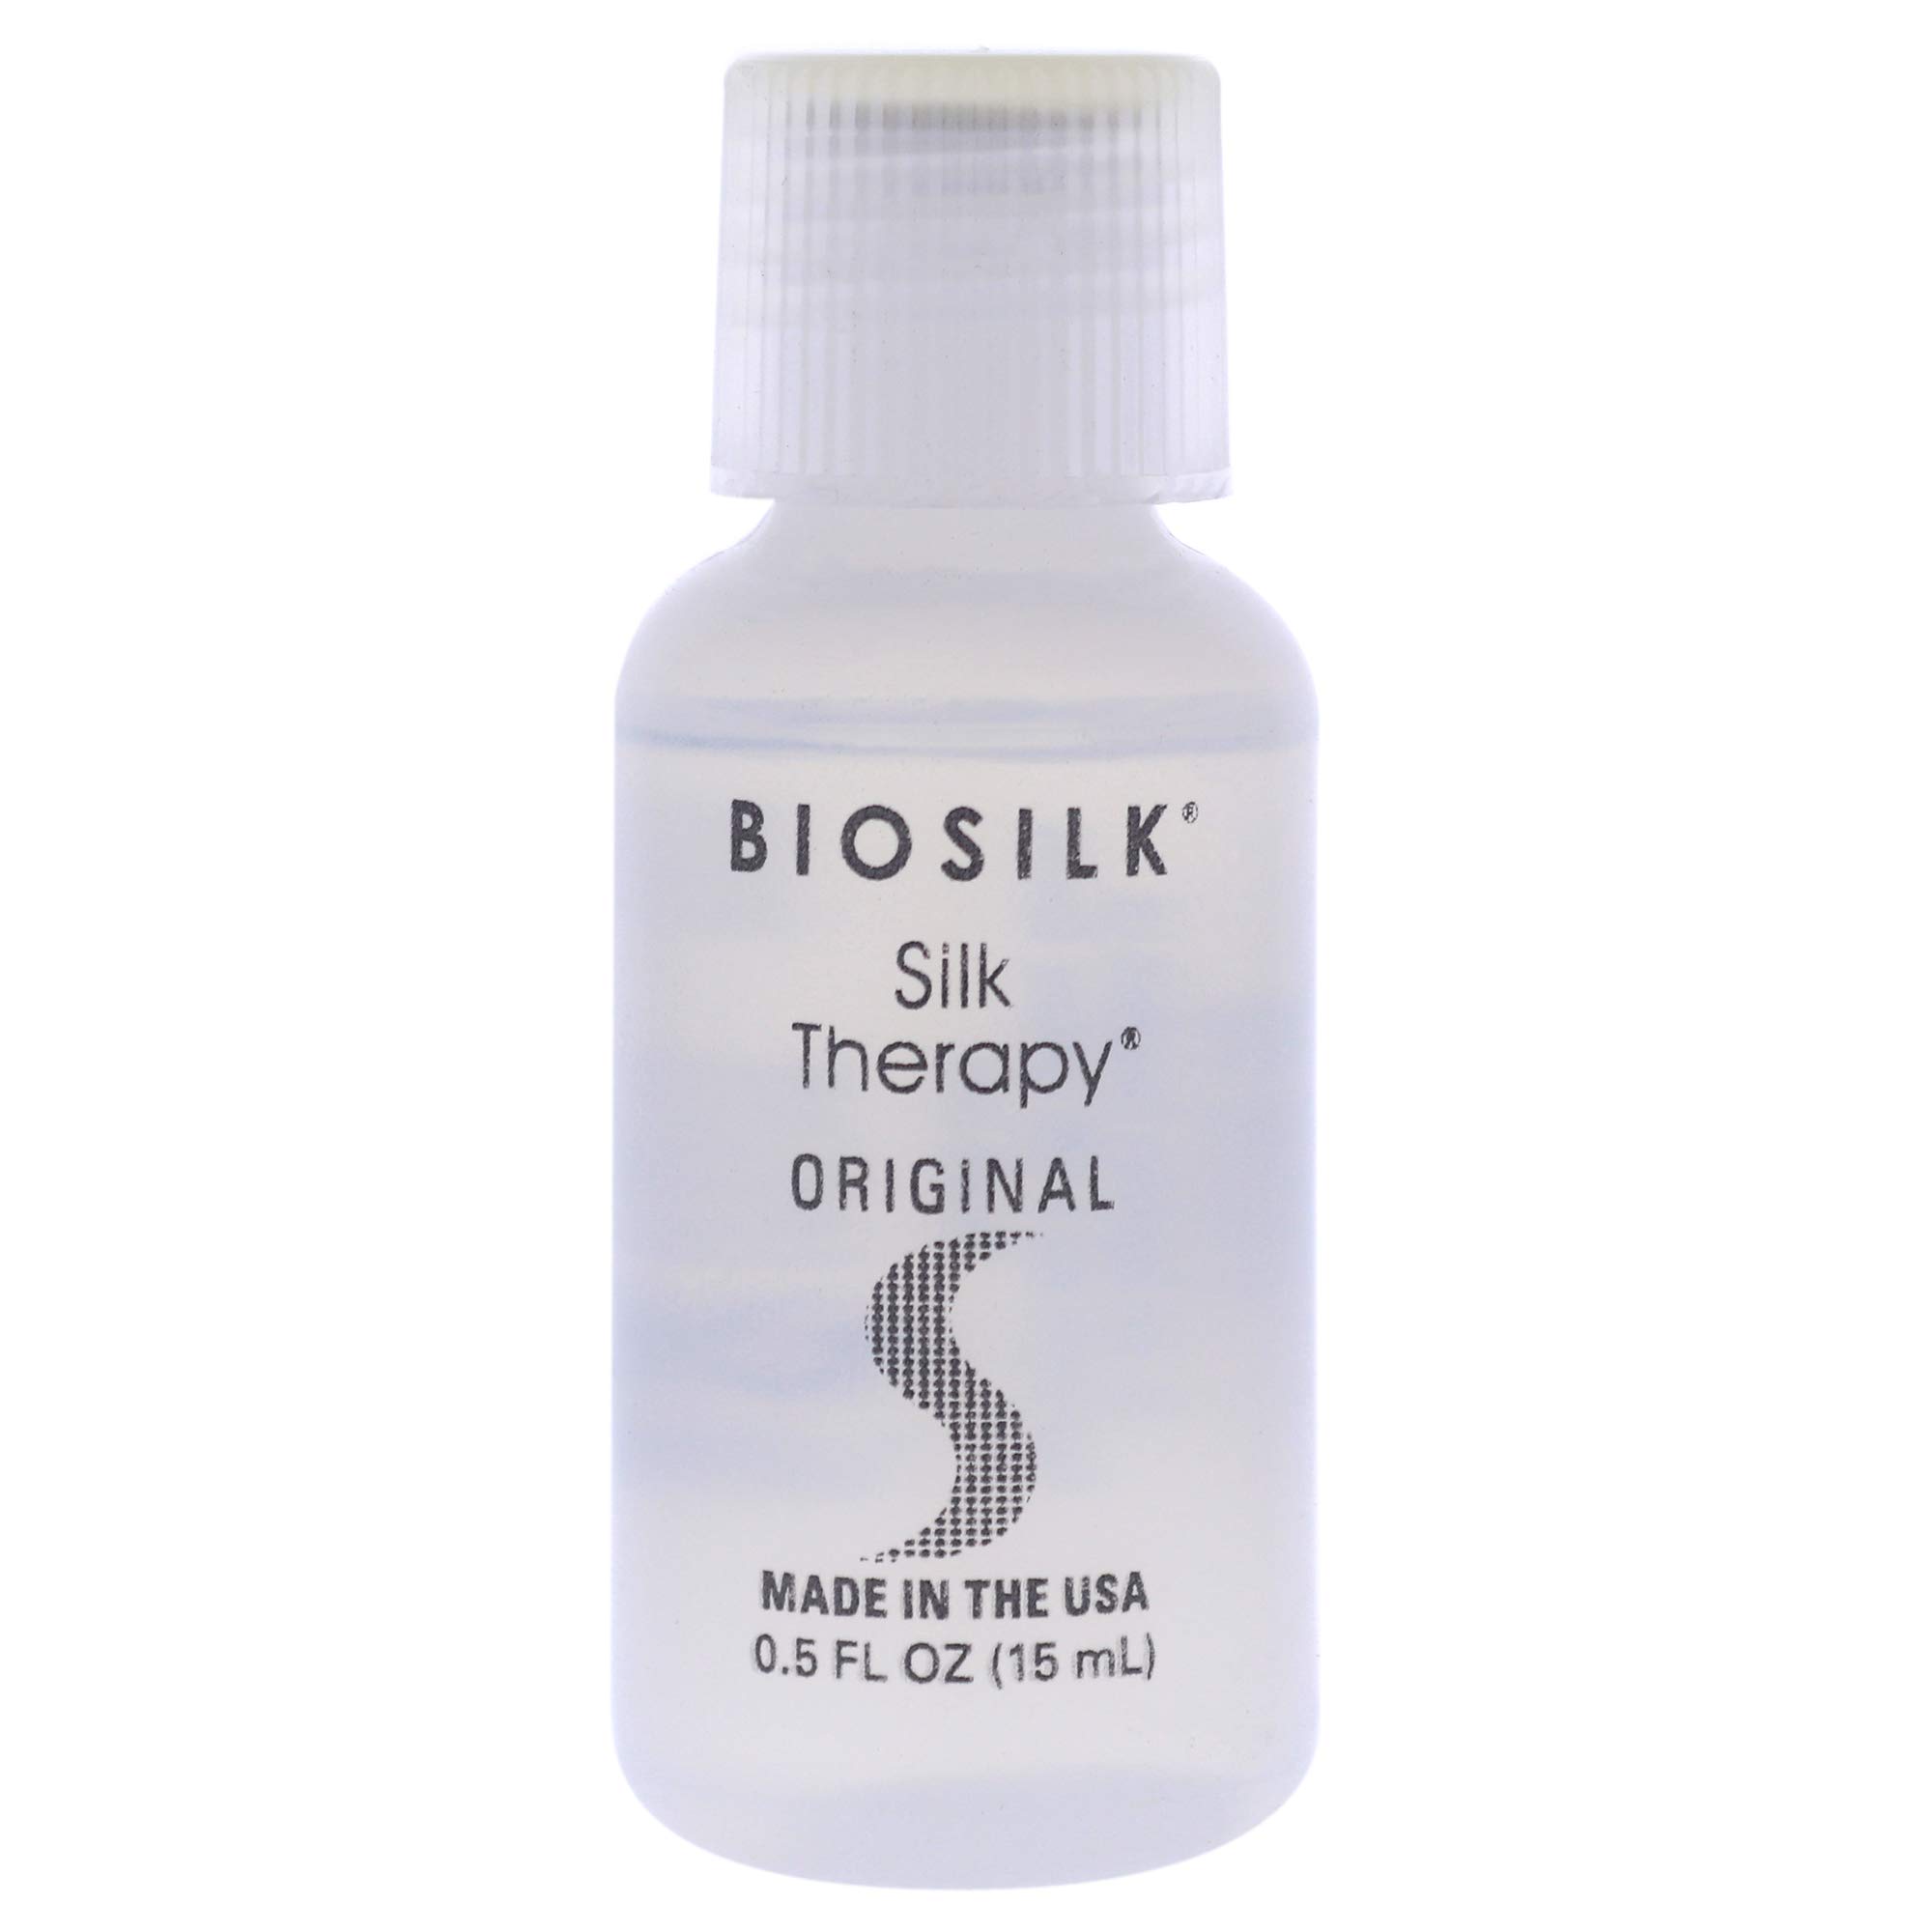 BioSilk Silk Therapy, Original, 0.5 Ounce